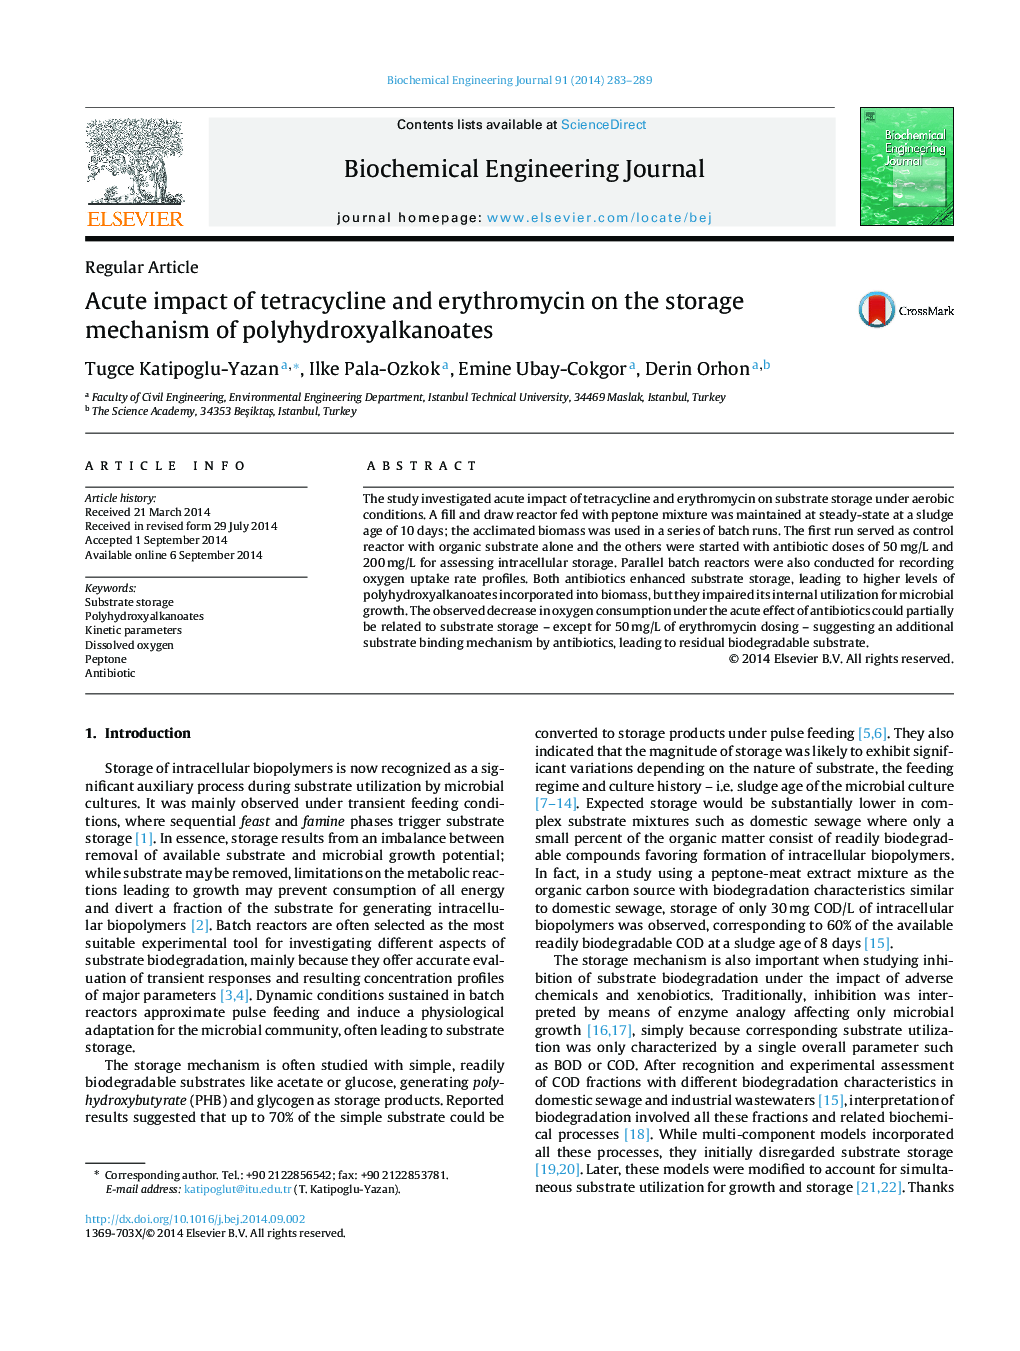 Acute impact of tetracycline and erythromycin on the storage mechanism of polyhydroxyalkanoates